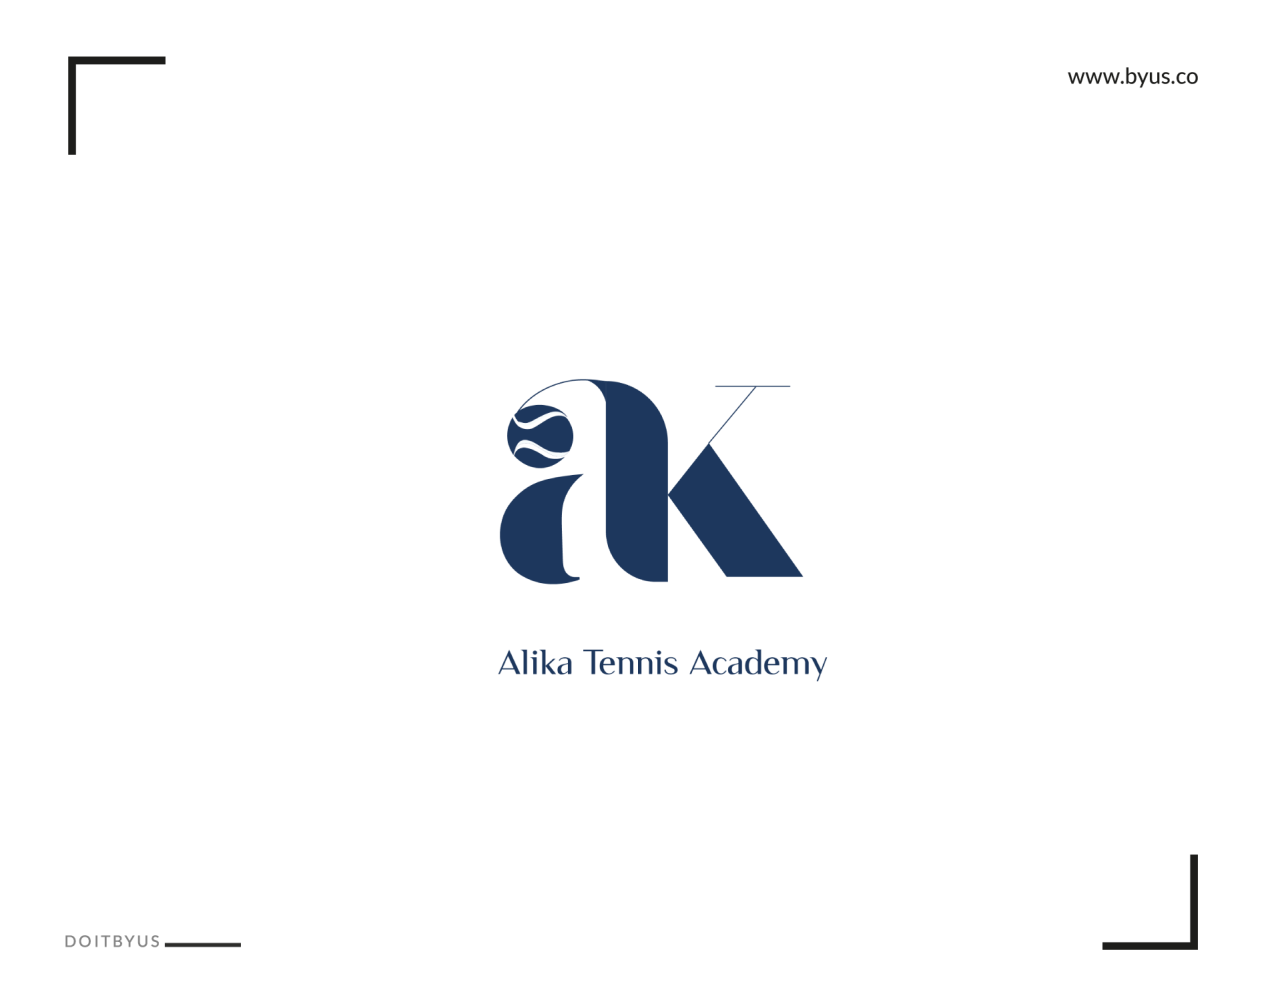 Alika tennis academy logo